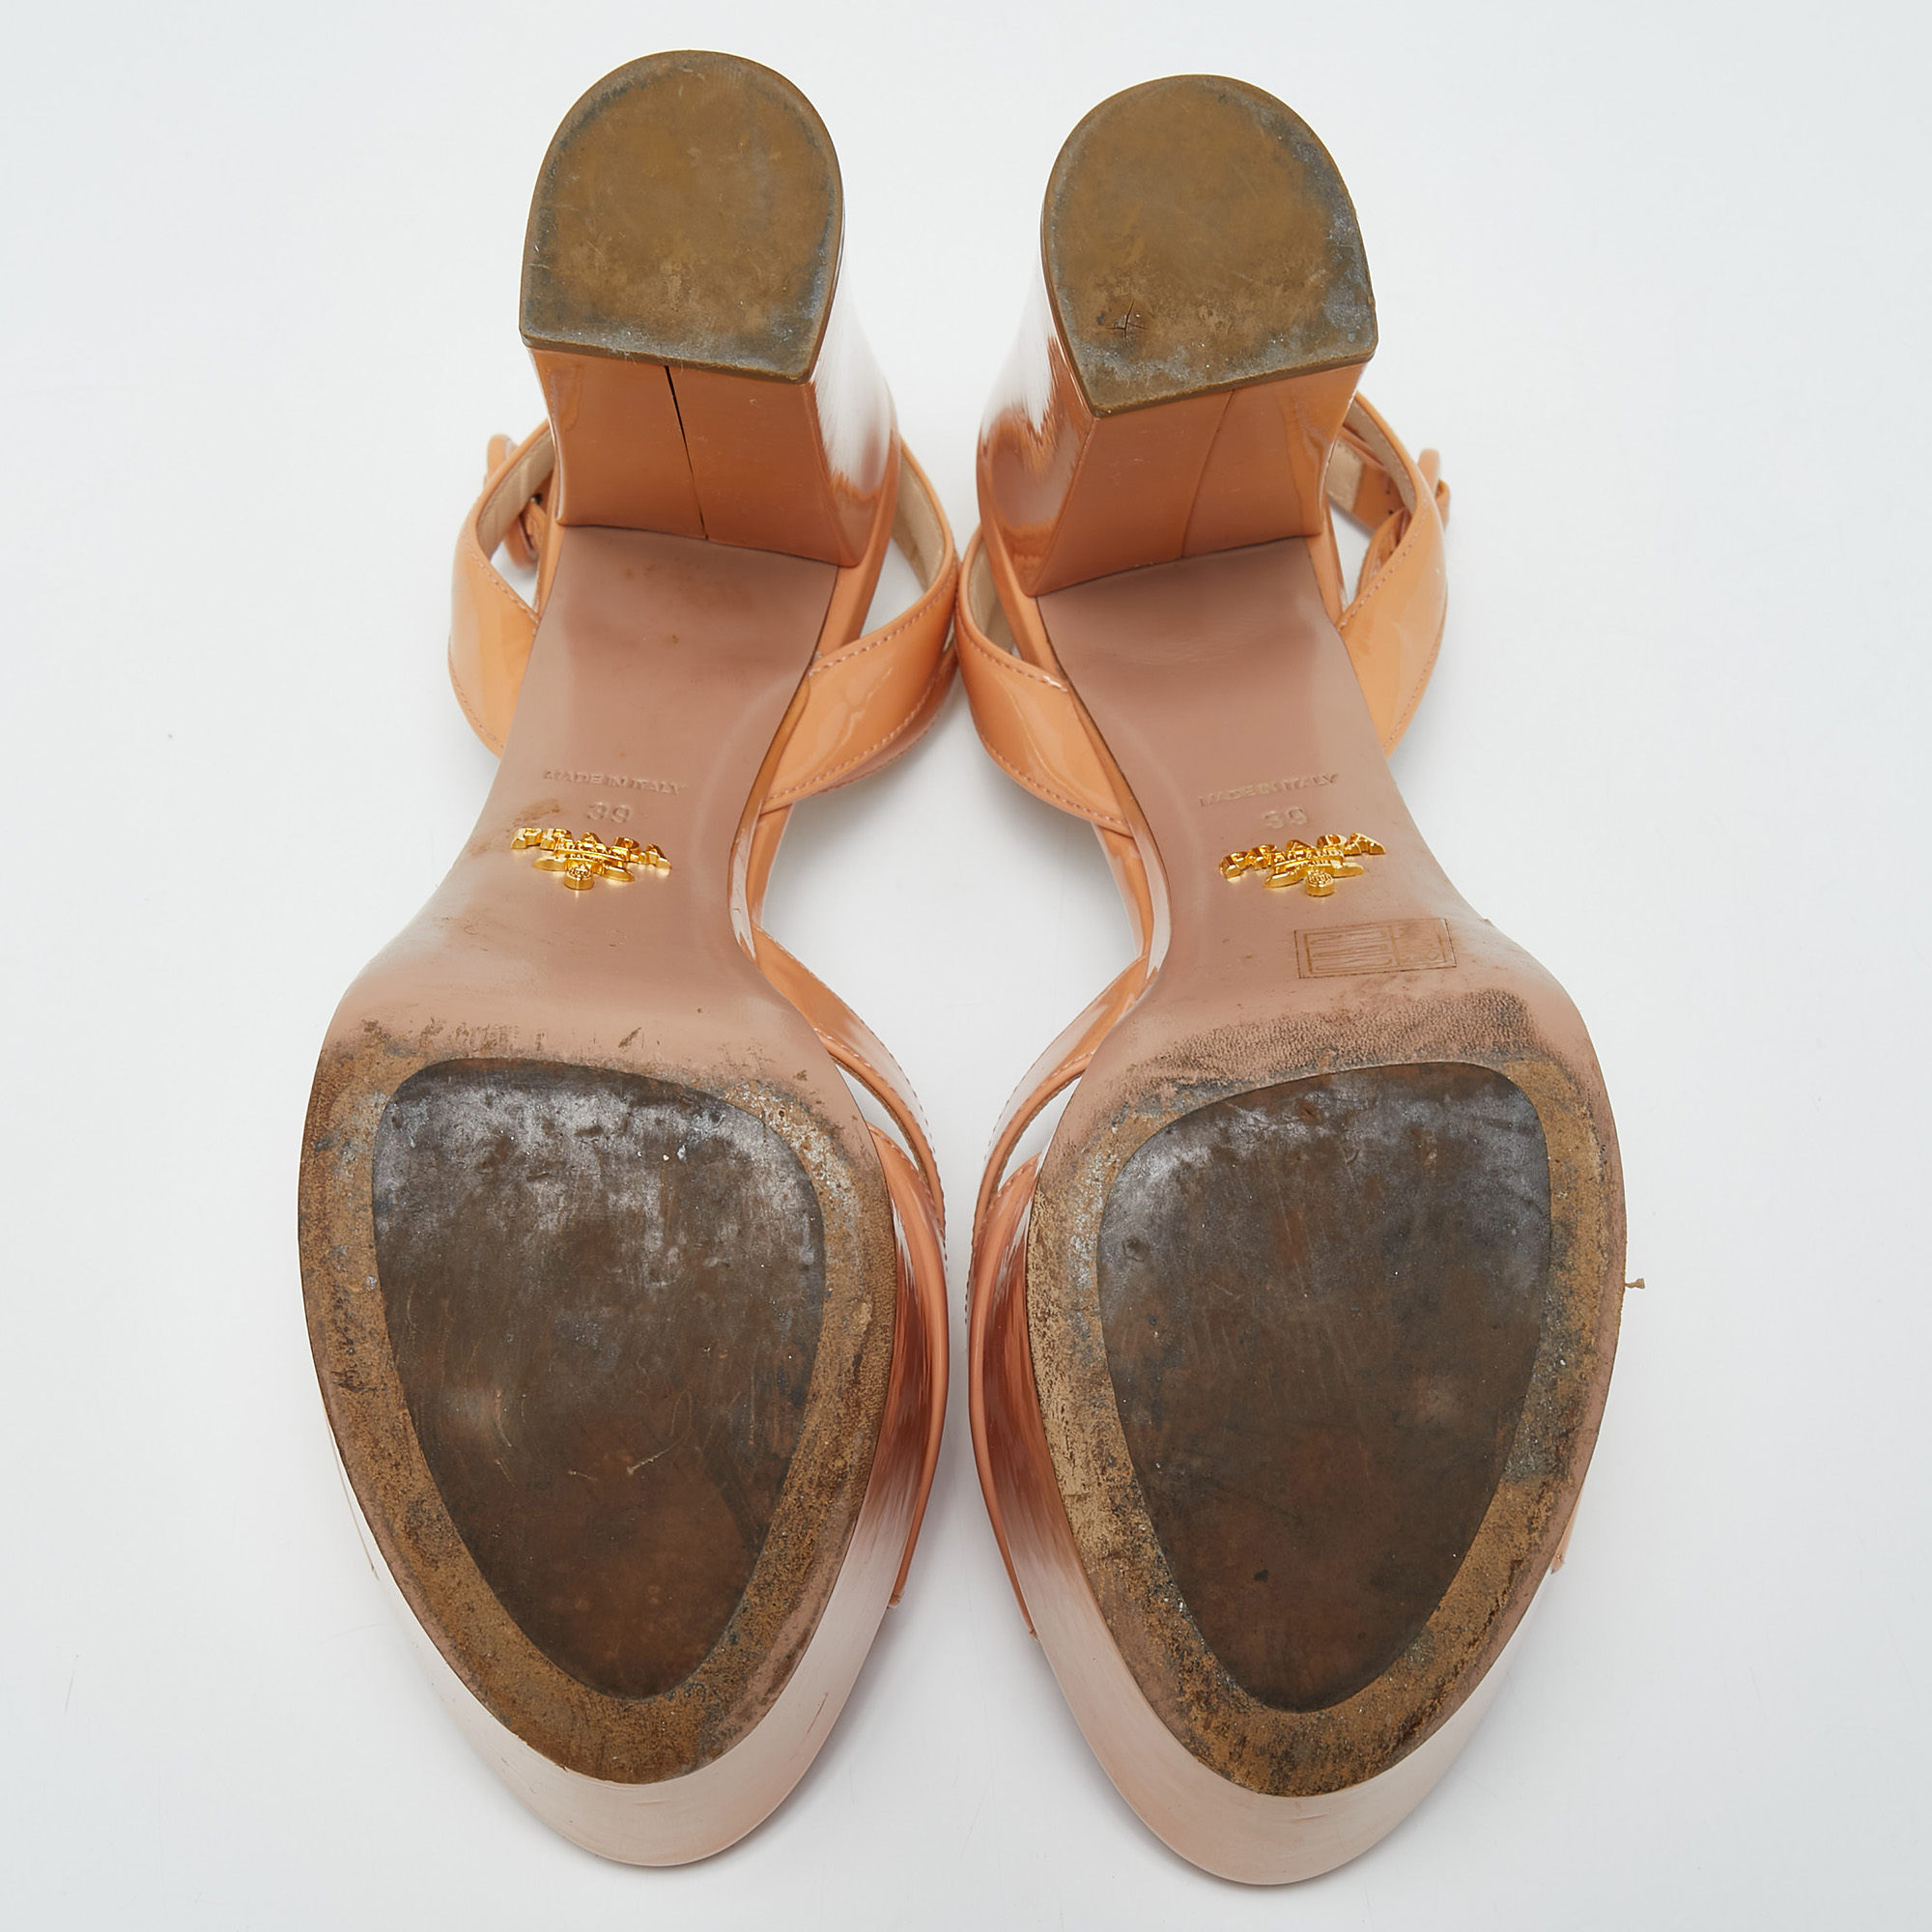 Prada Beige Patent Leather Platform Ankle Strap Sandals Size 39